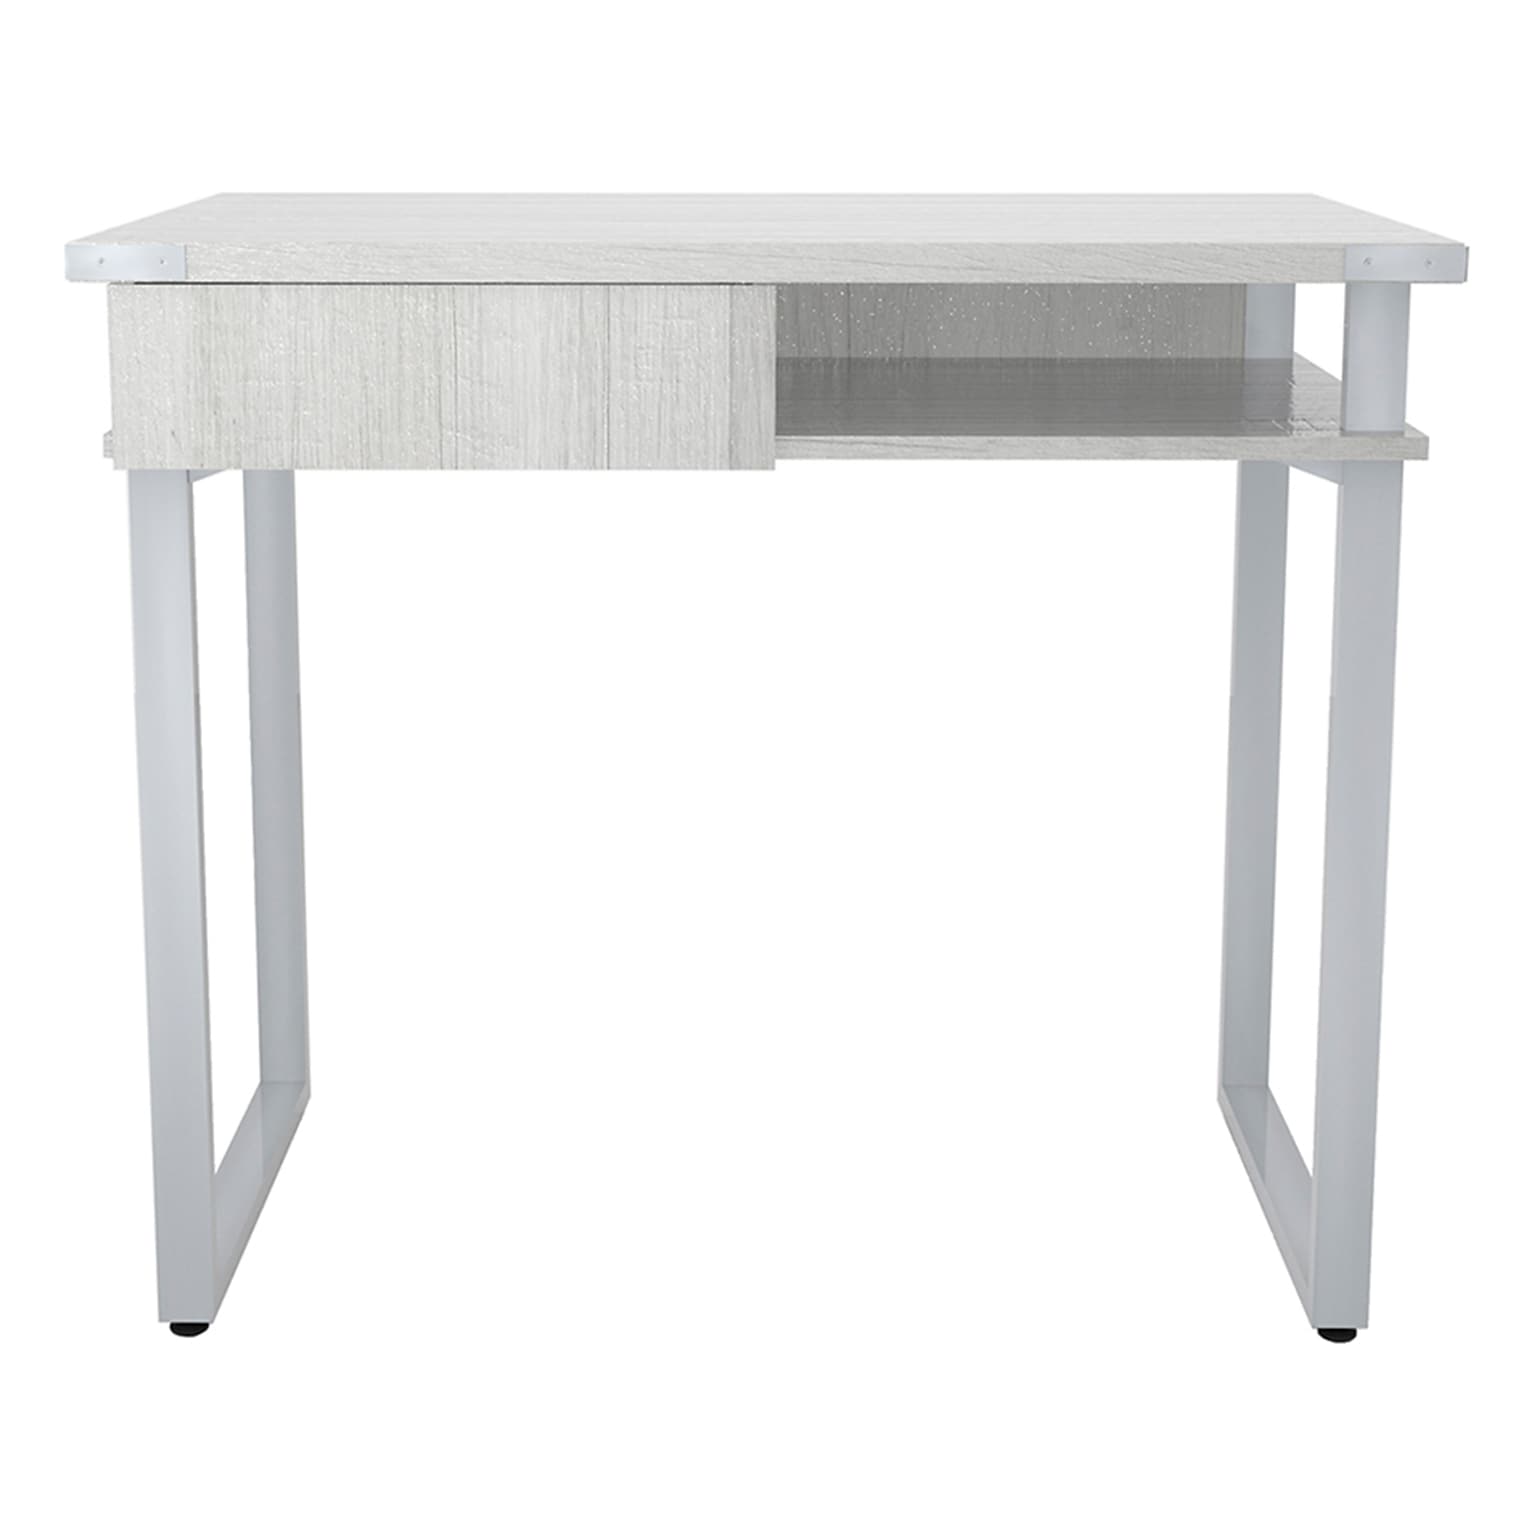 Safco Mirella SOHO 36W Table Desk with Drawer, White Ash (5512WAH)